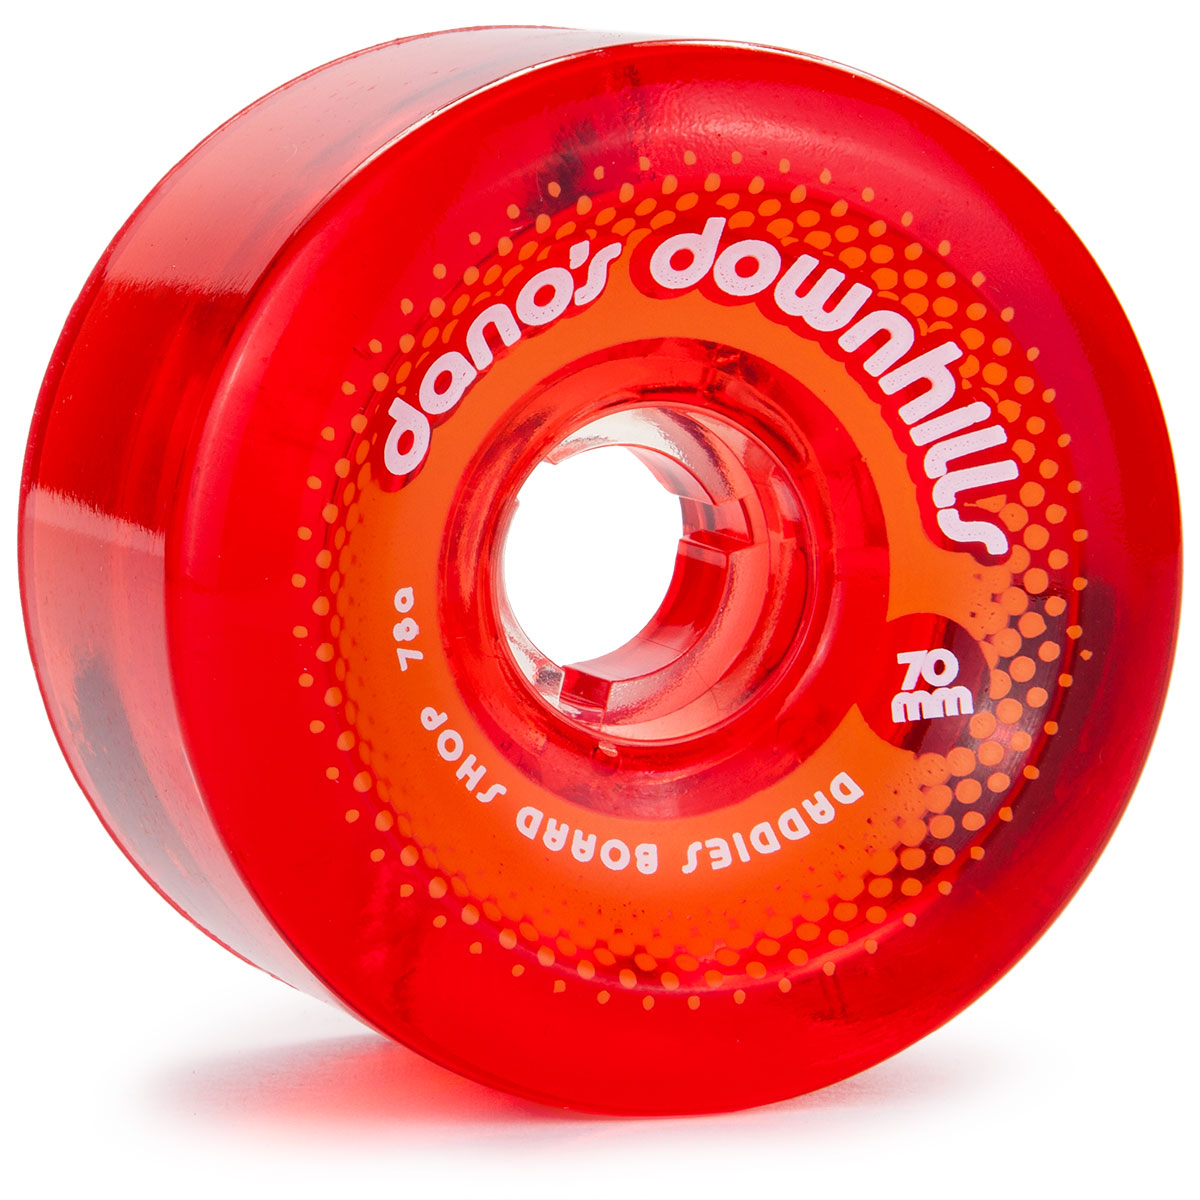 Dano's Downhills Longboard Wheels 70mm - 78a Red image 1